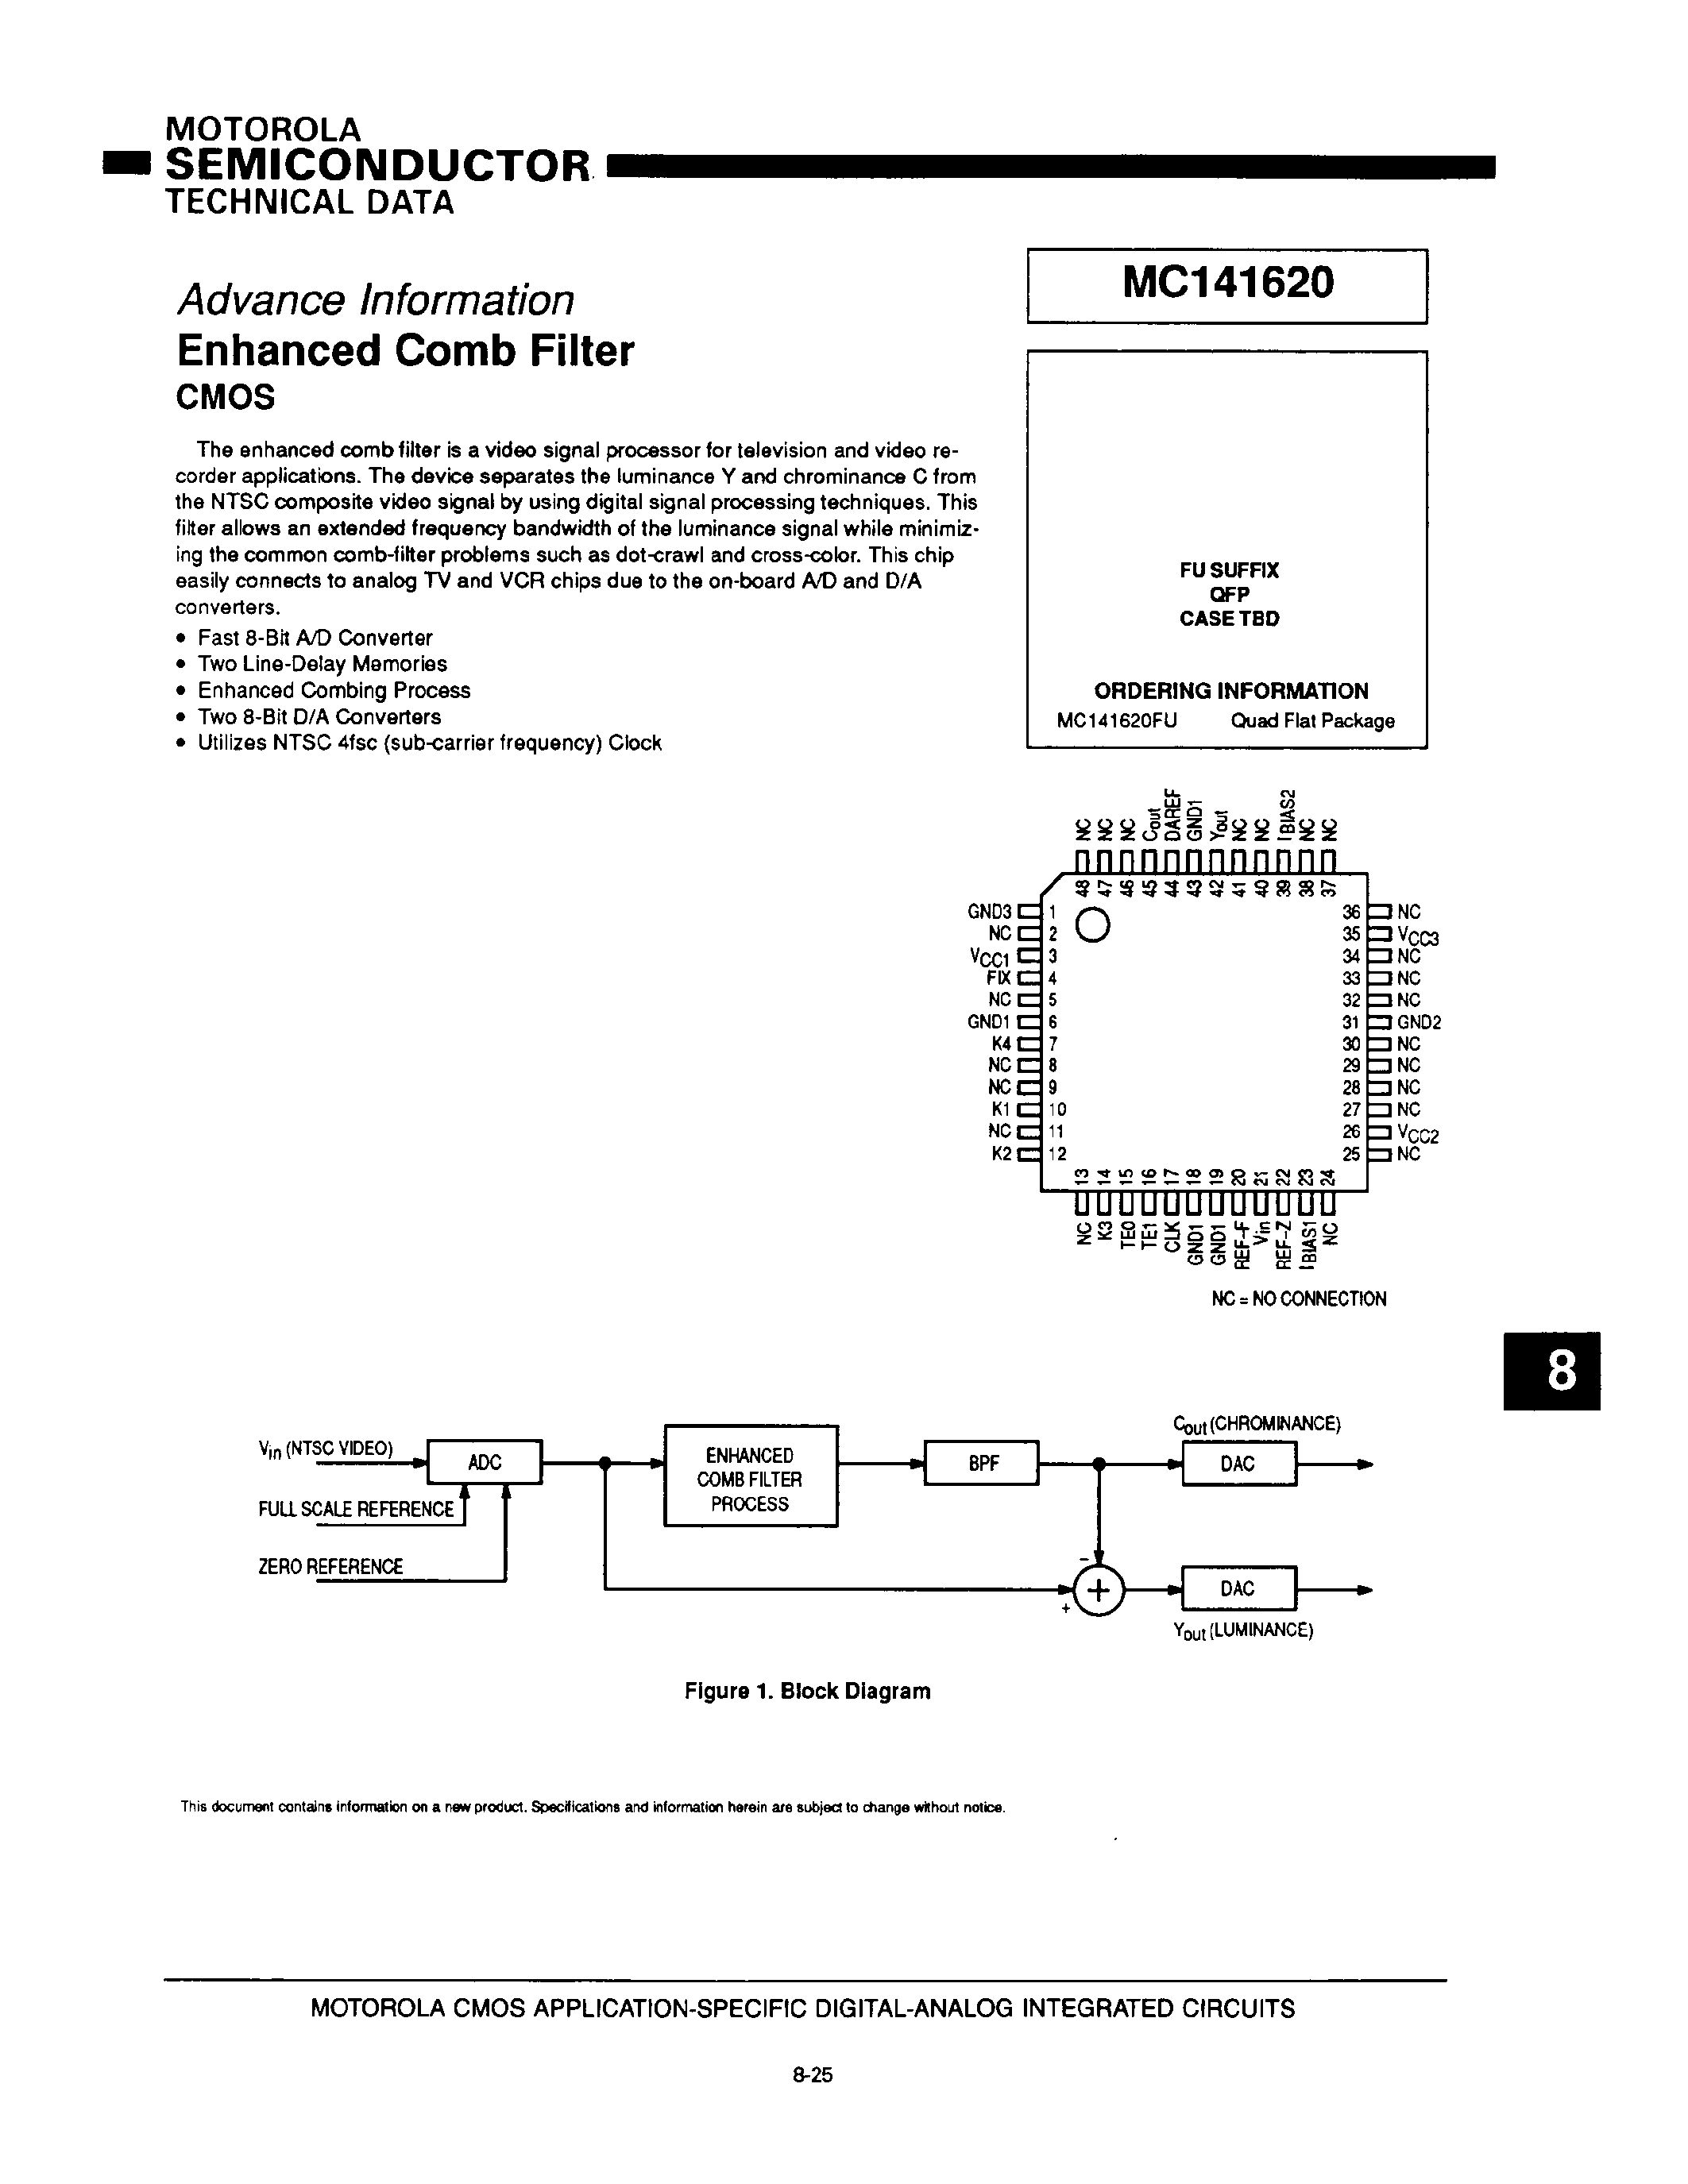 Даташит MC141620FU - Enhanced Comb Filter страница 1